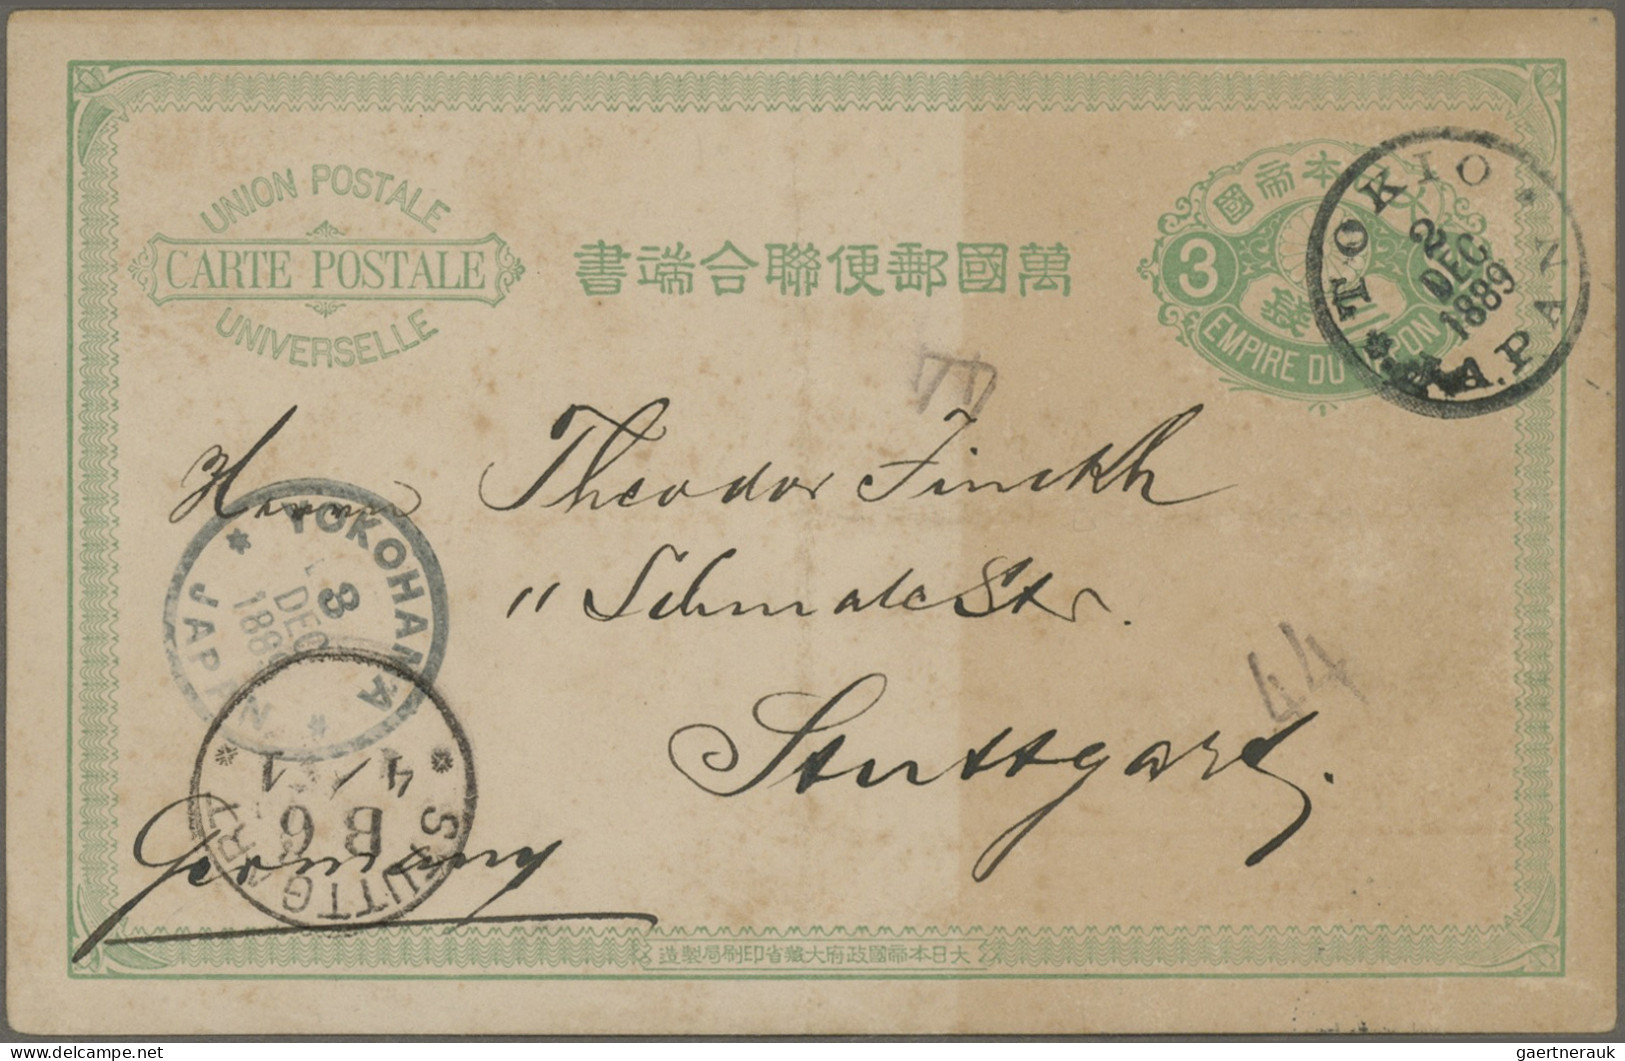 Japan: 1876/1935, part of 1921/22 Morimiya&Co. correspondence to Leipzig/Germany